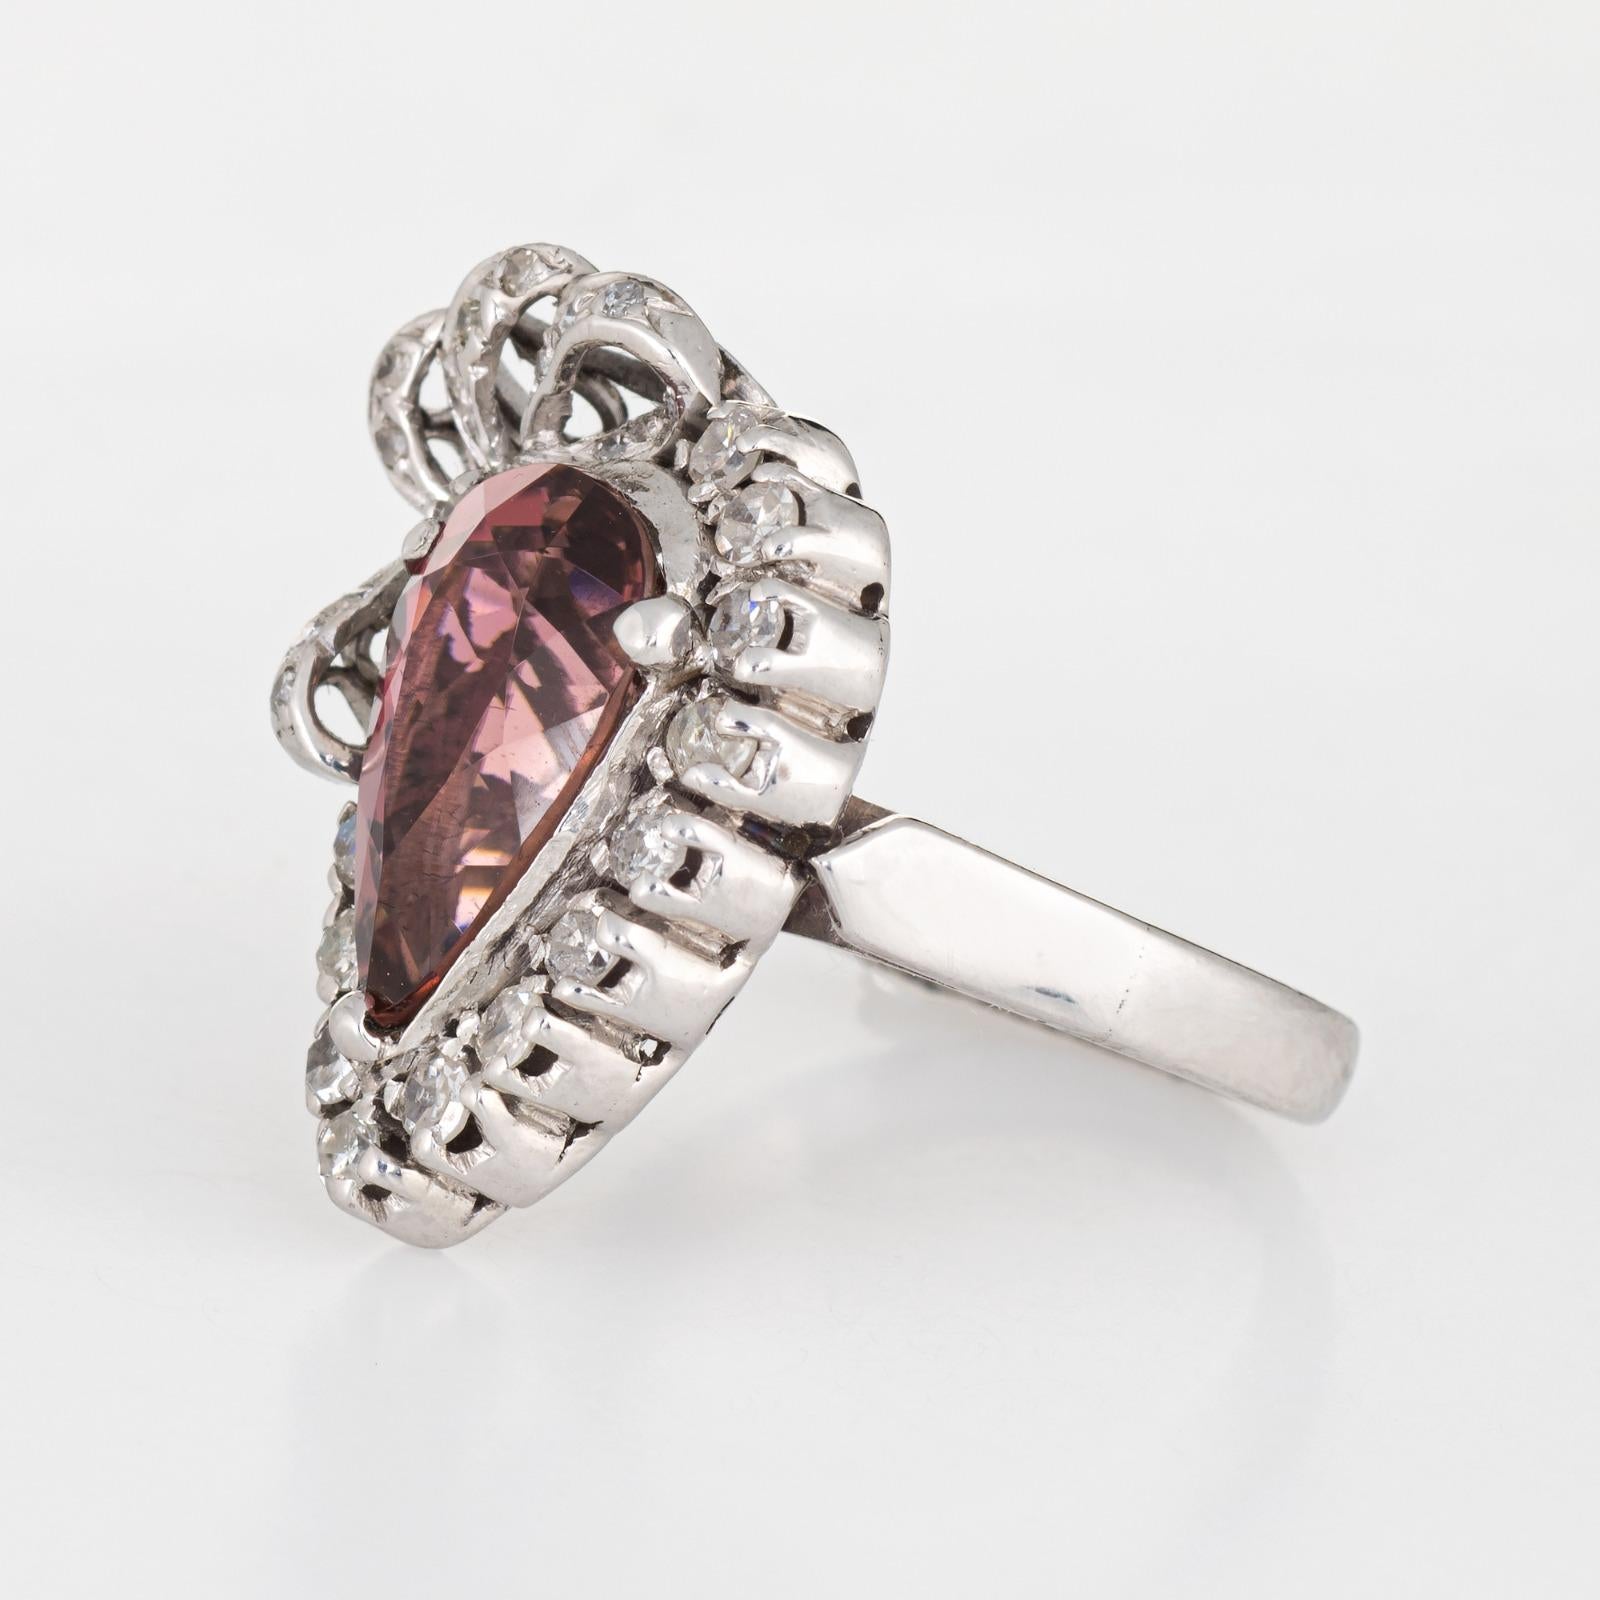 Pear Cut Vintage Pink Tourmaline Diamond Ring Cocktail 10k White Gold Fine Jewelry